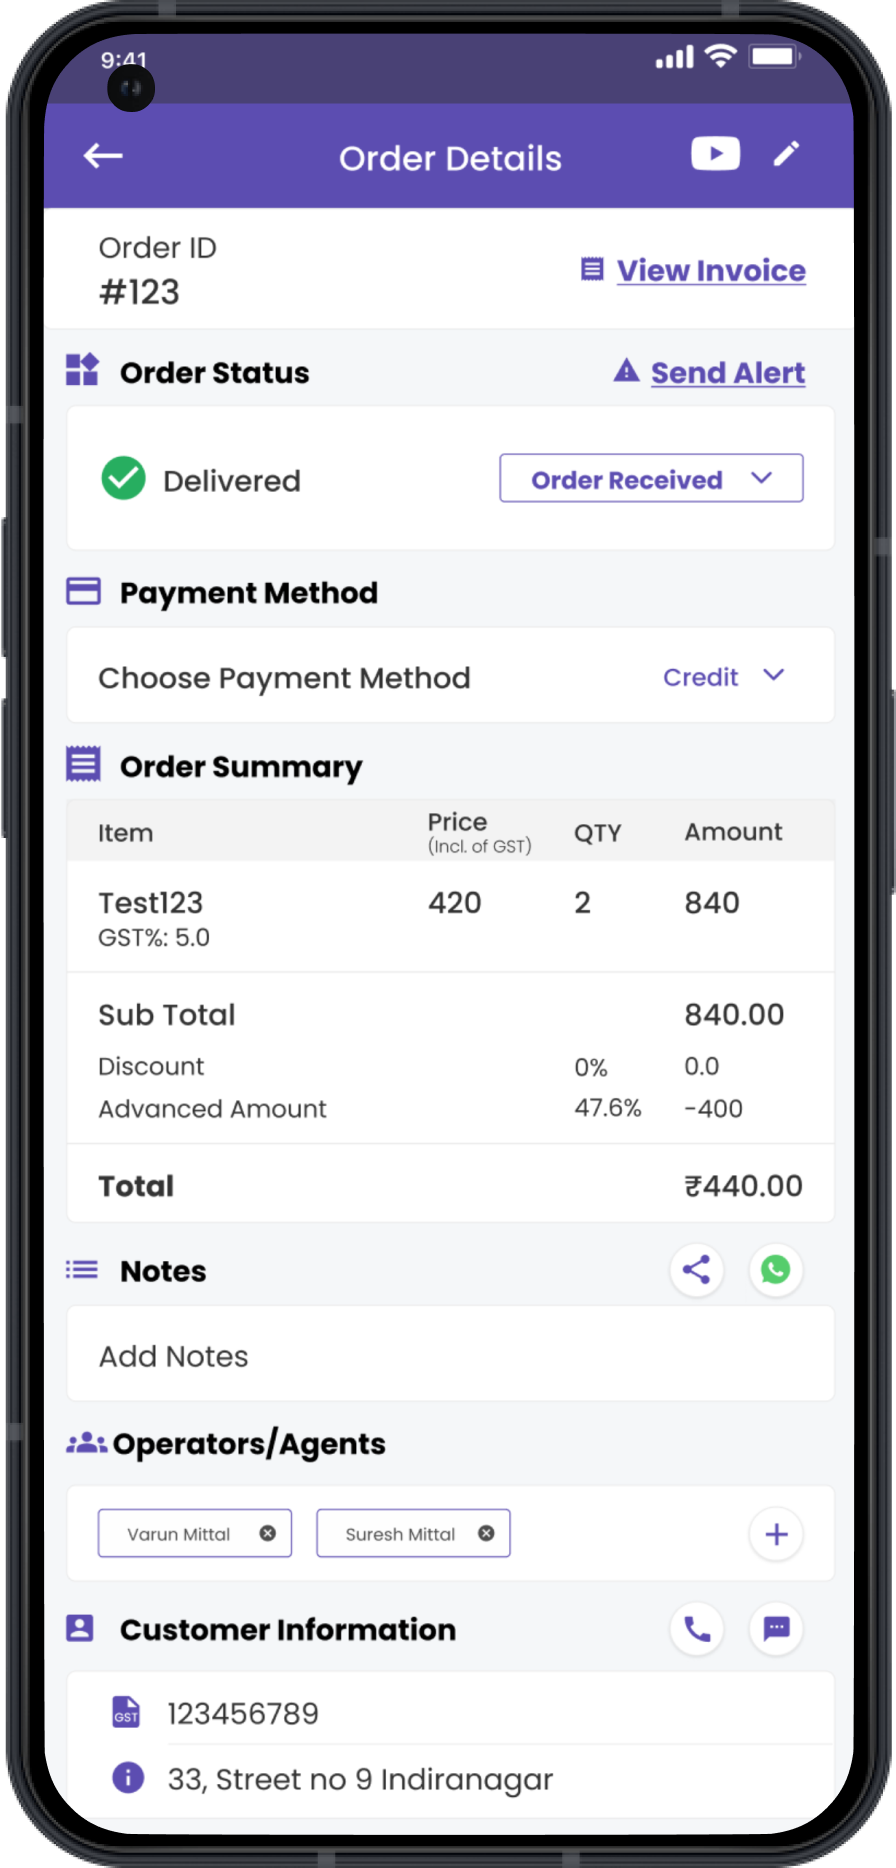 Order details screen of busniess app